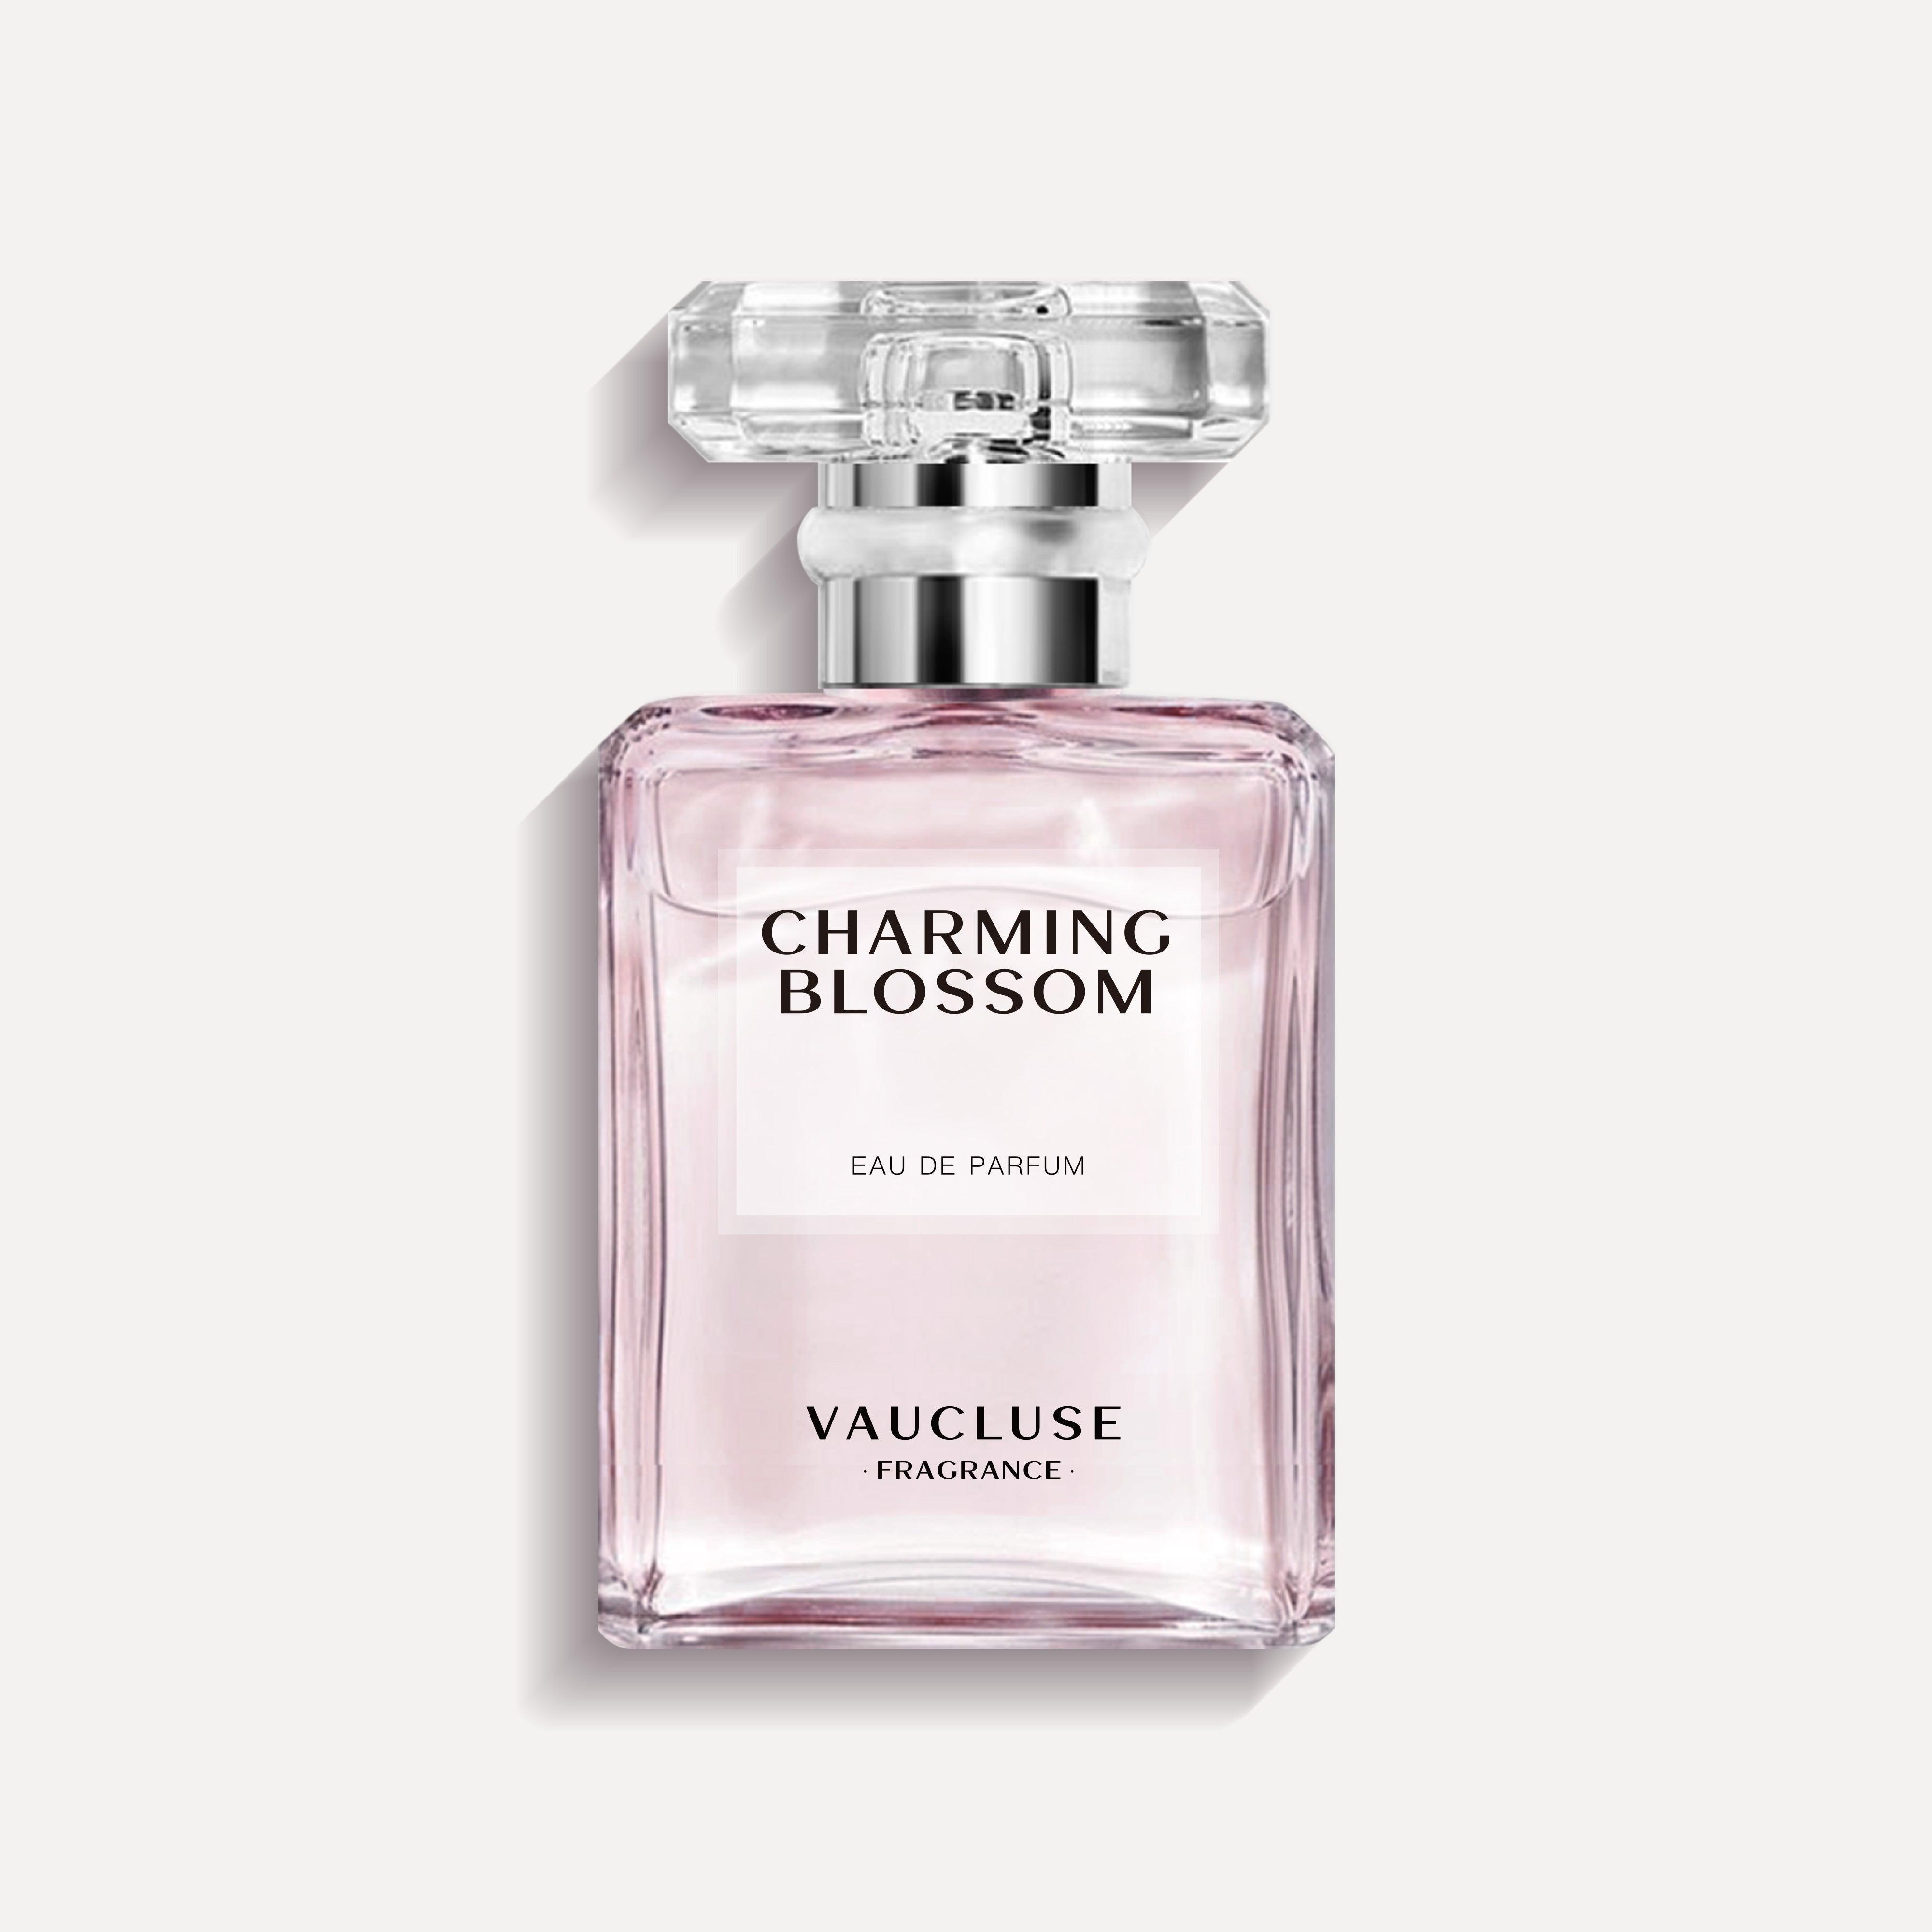 Charming Blossom Eau De Parfum - VAUCLUSE